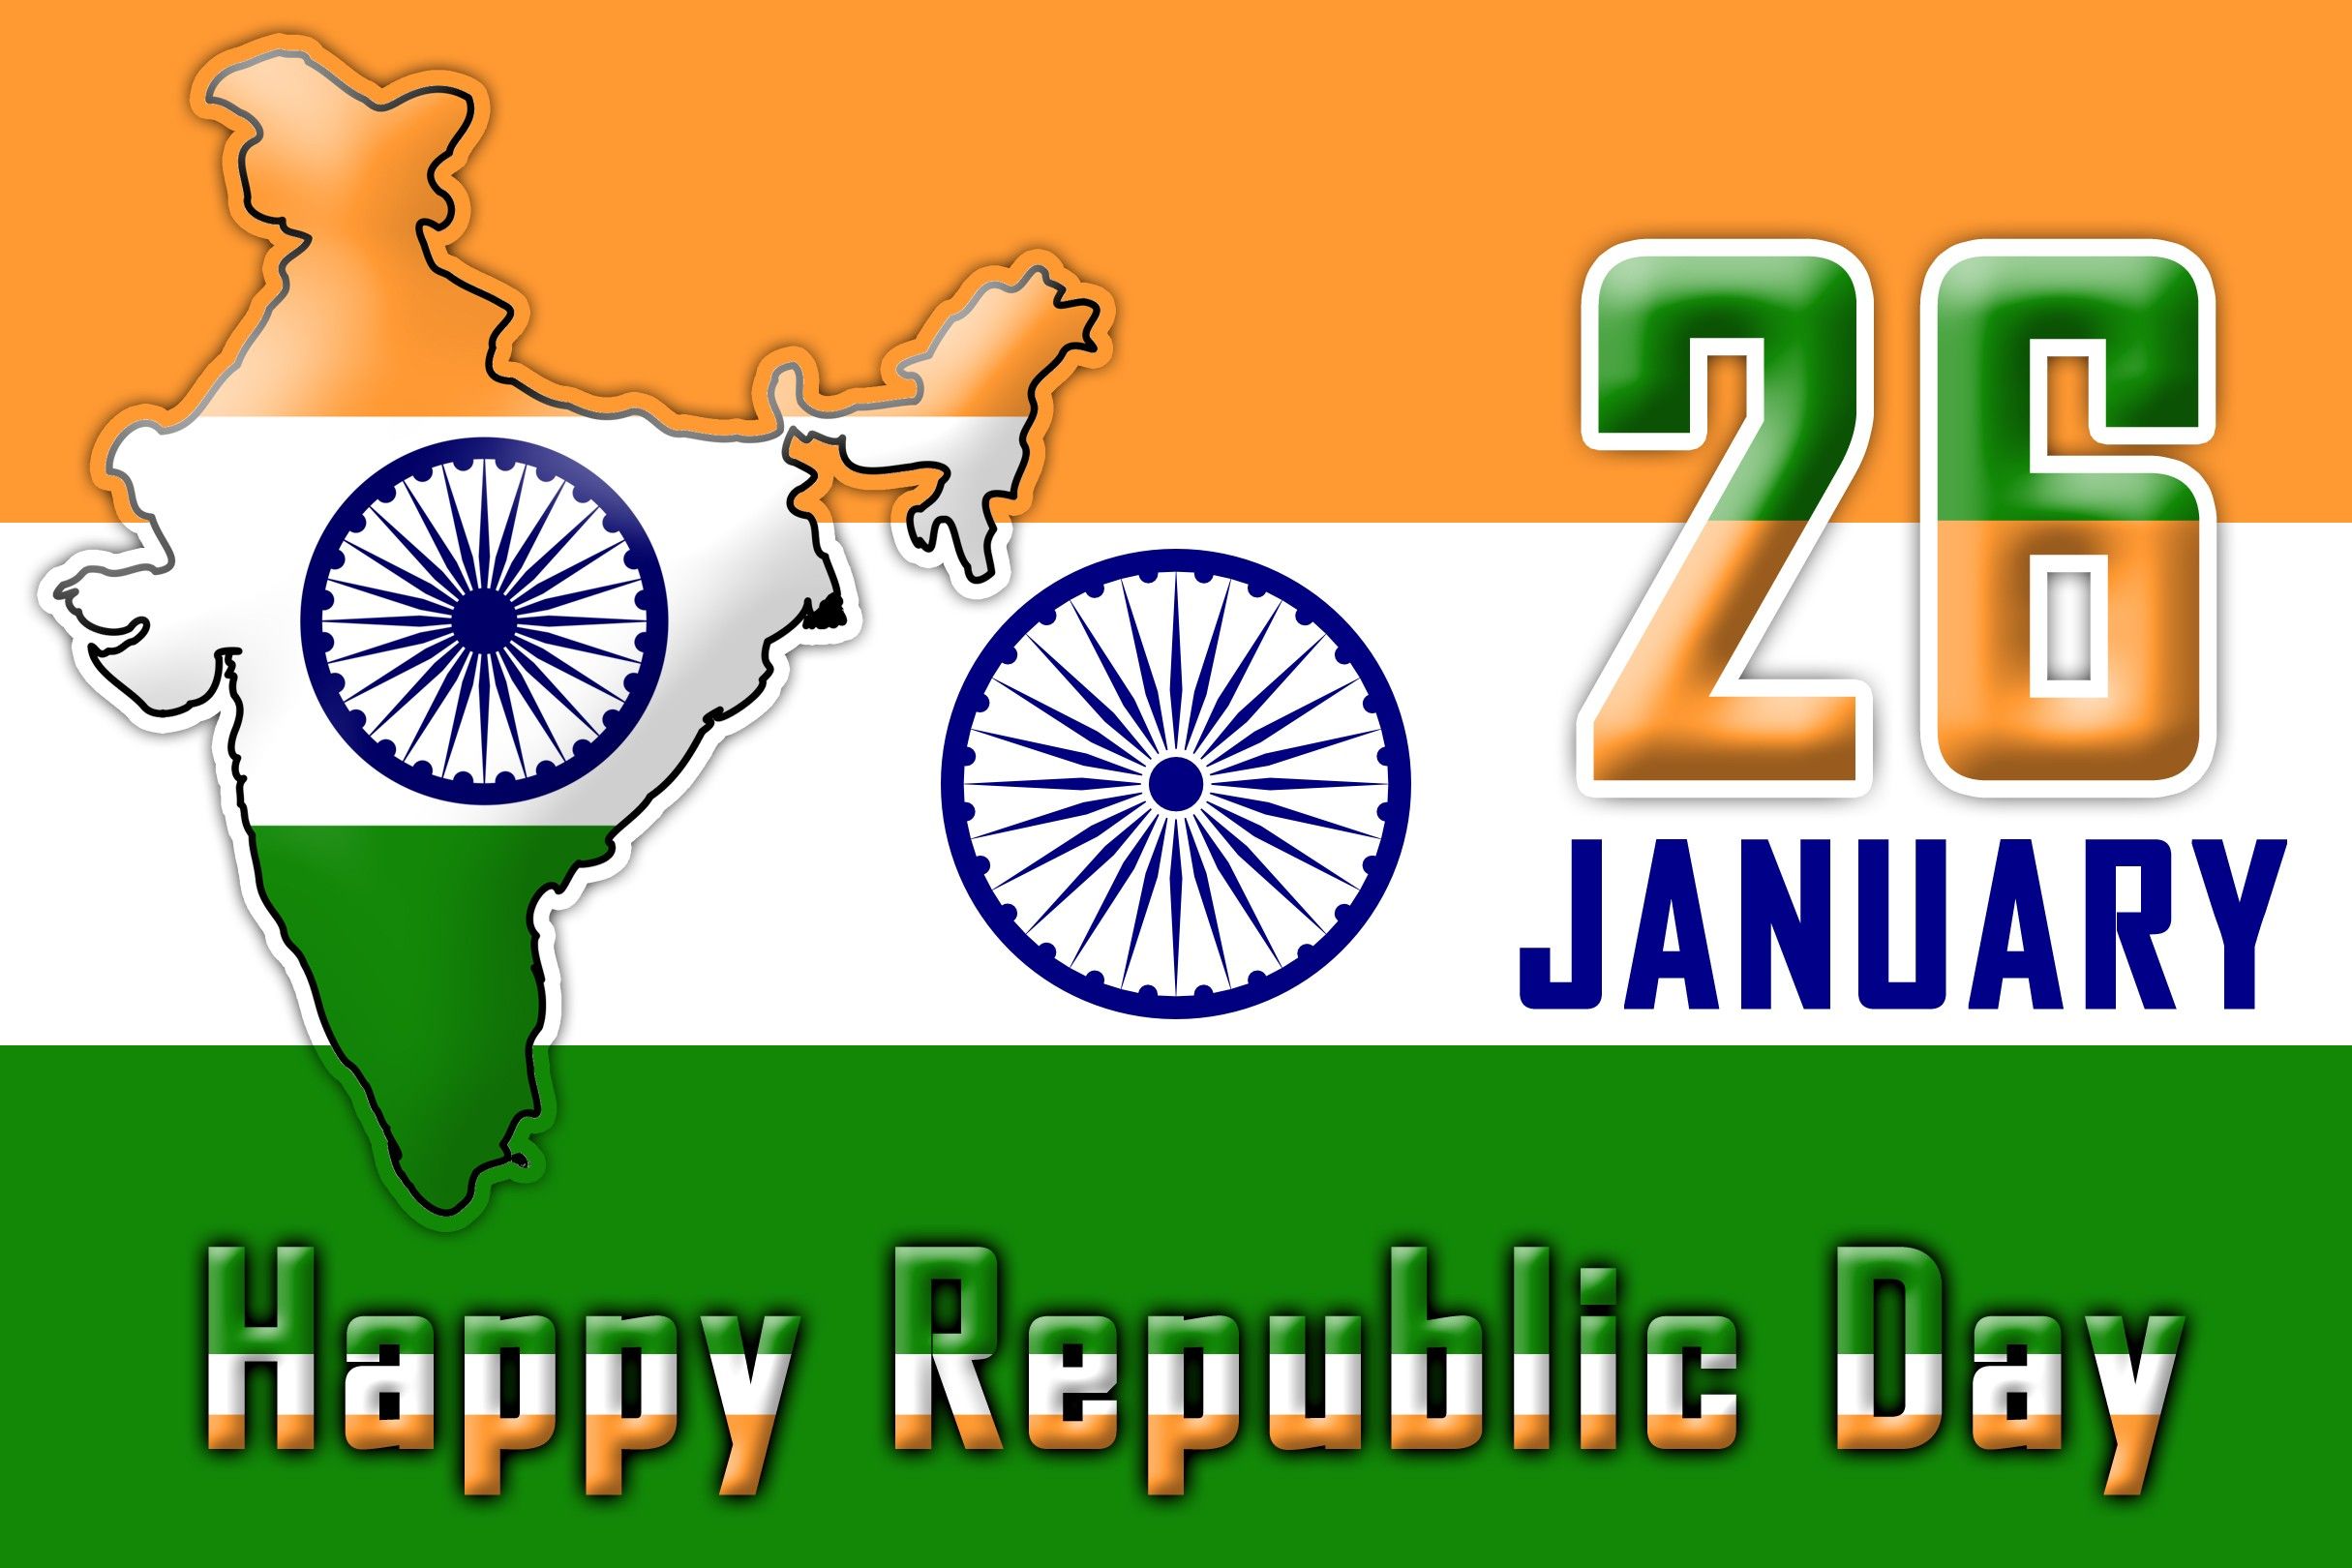 Happy Republic Day Image, Wallpaper, Photo Download 2021 HD